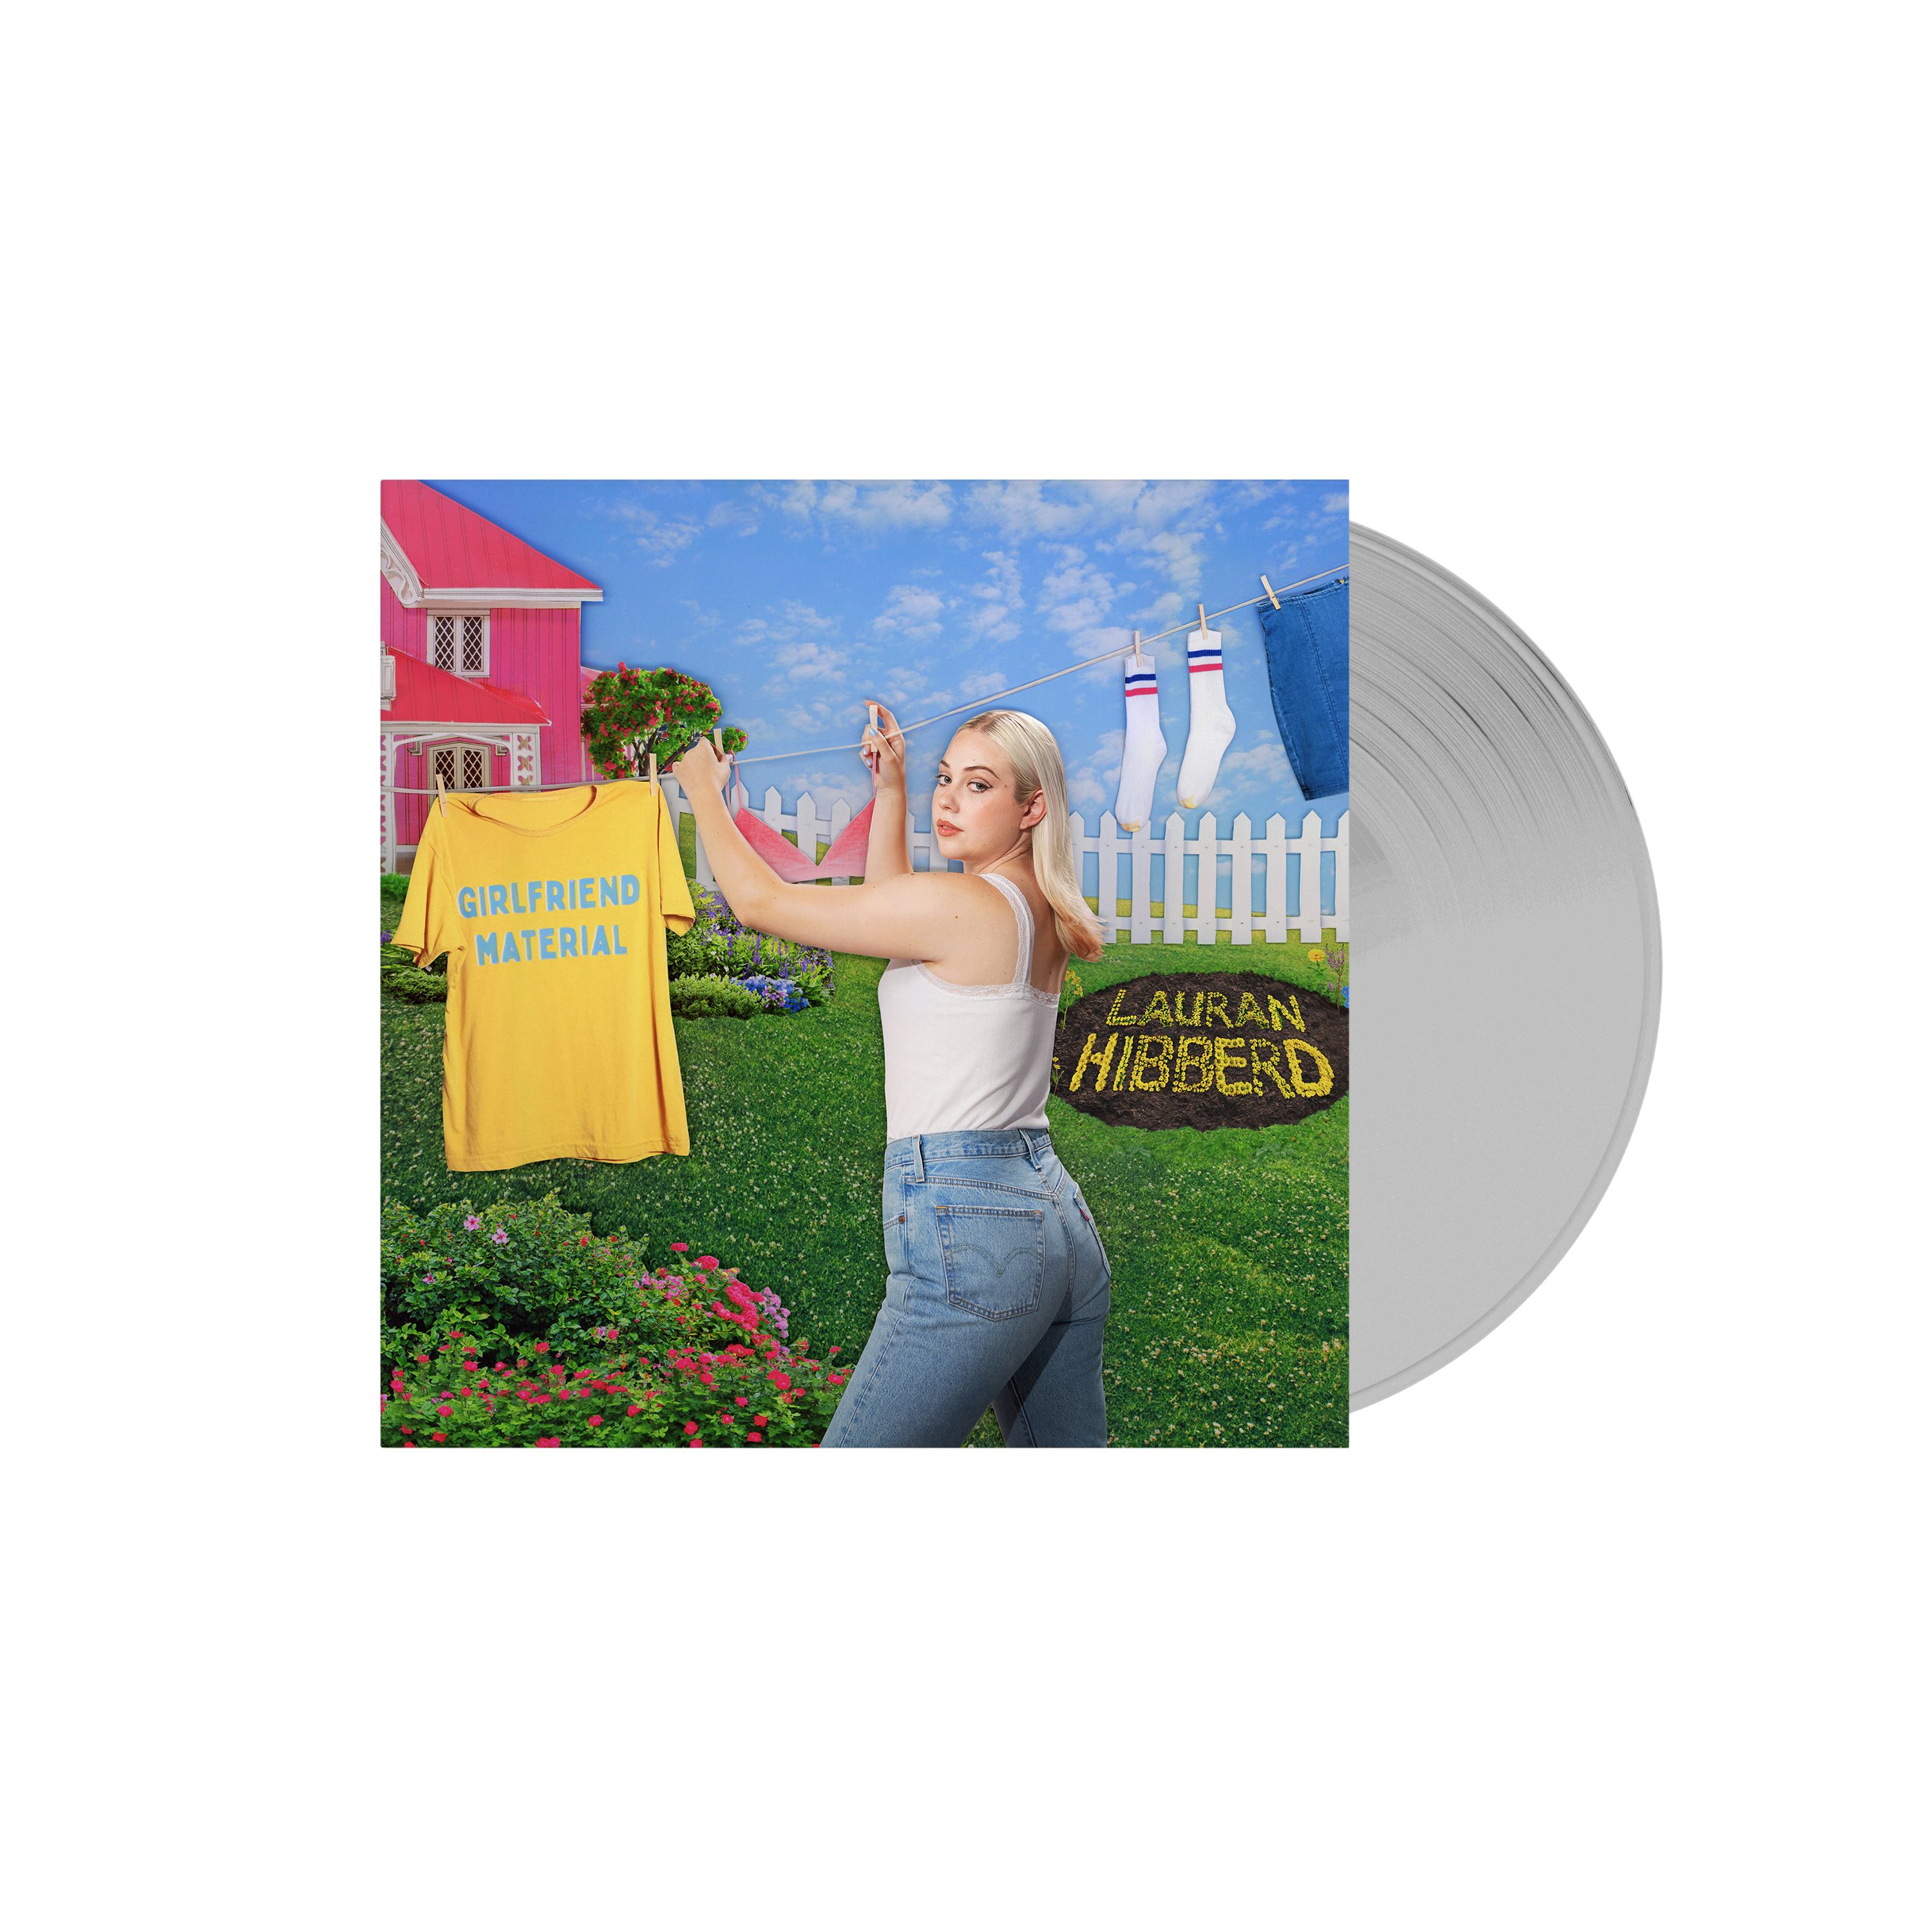 girlfriend material: Clear Vinyl LP, T-Shirt + Signed Print